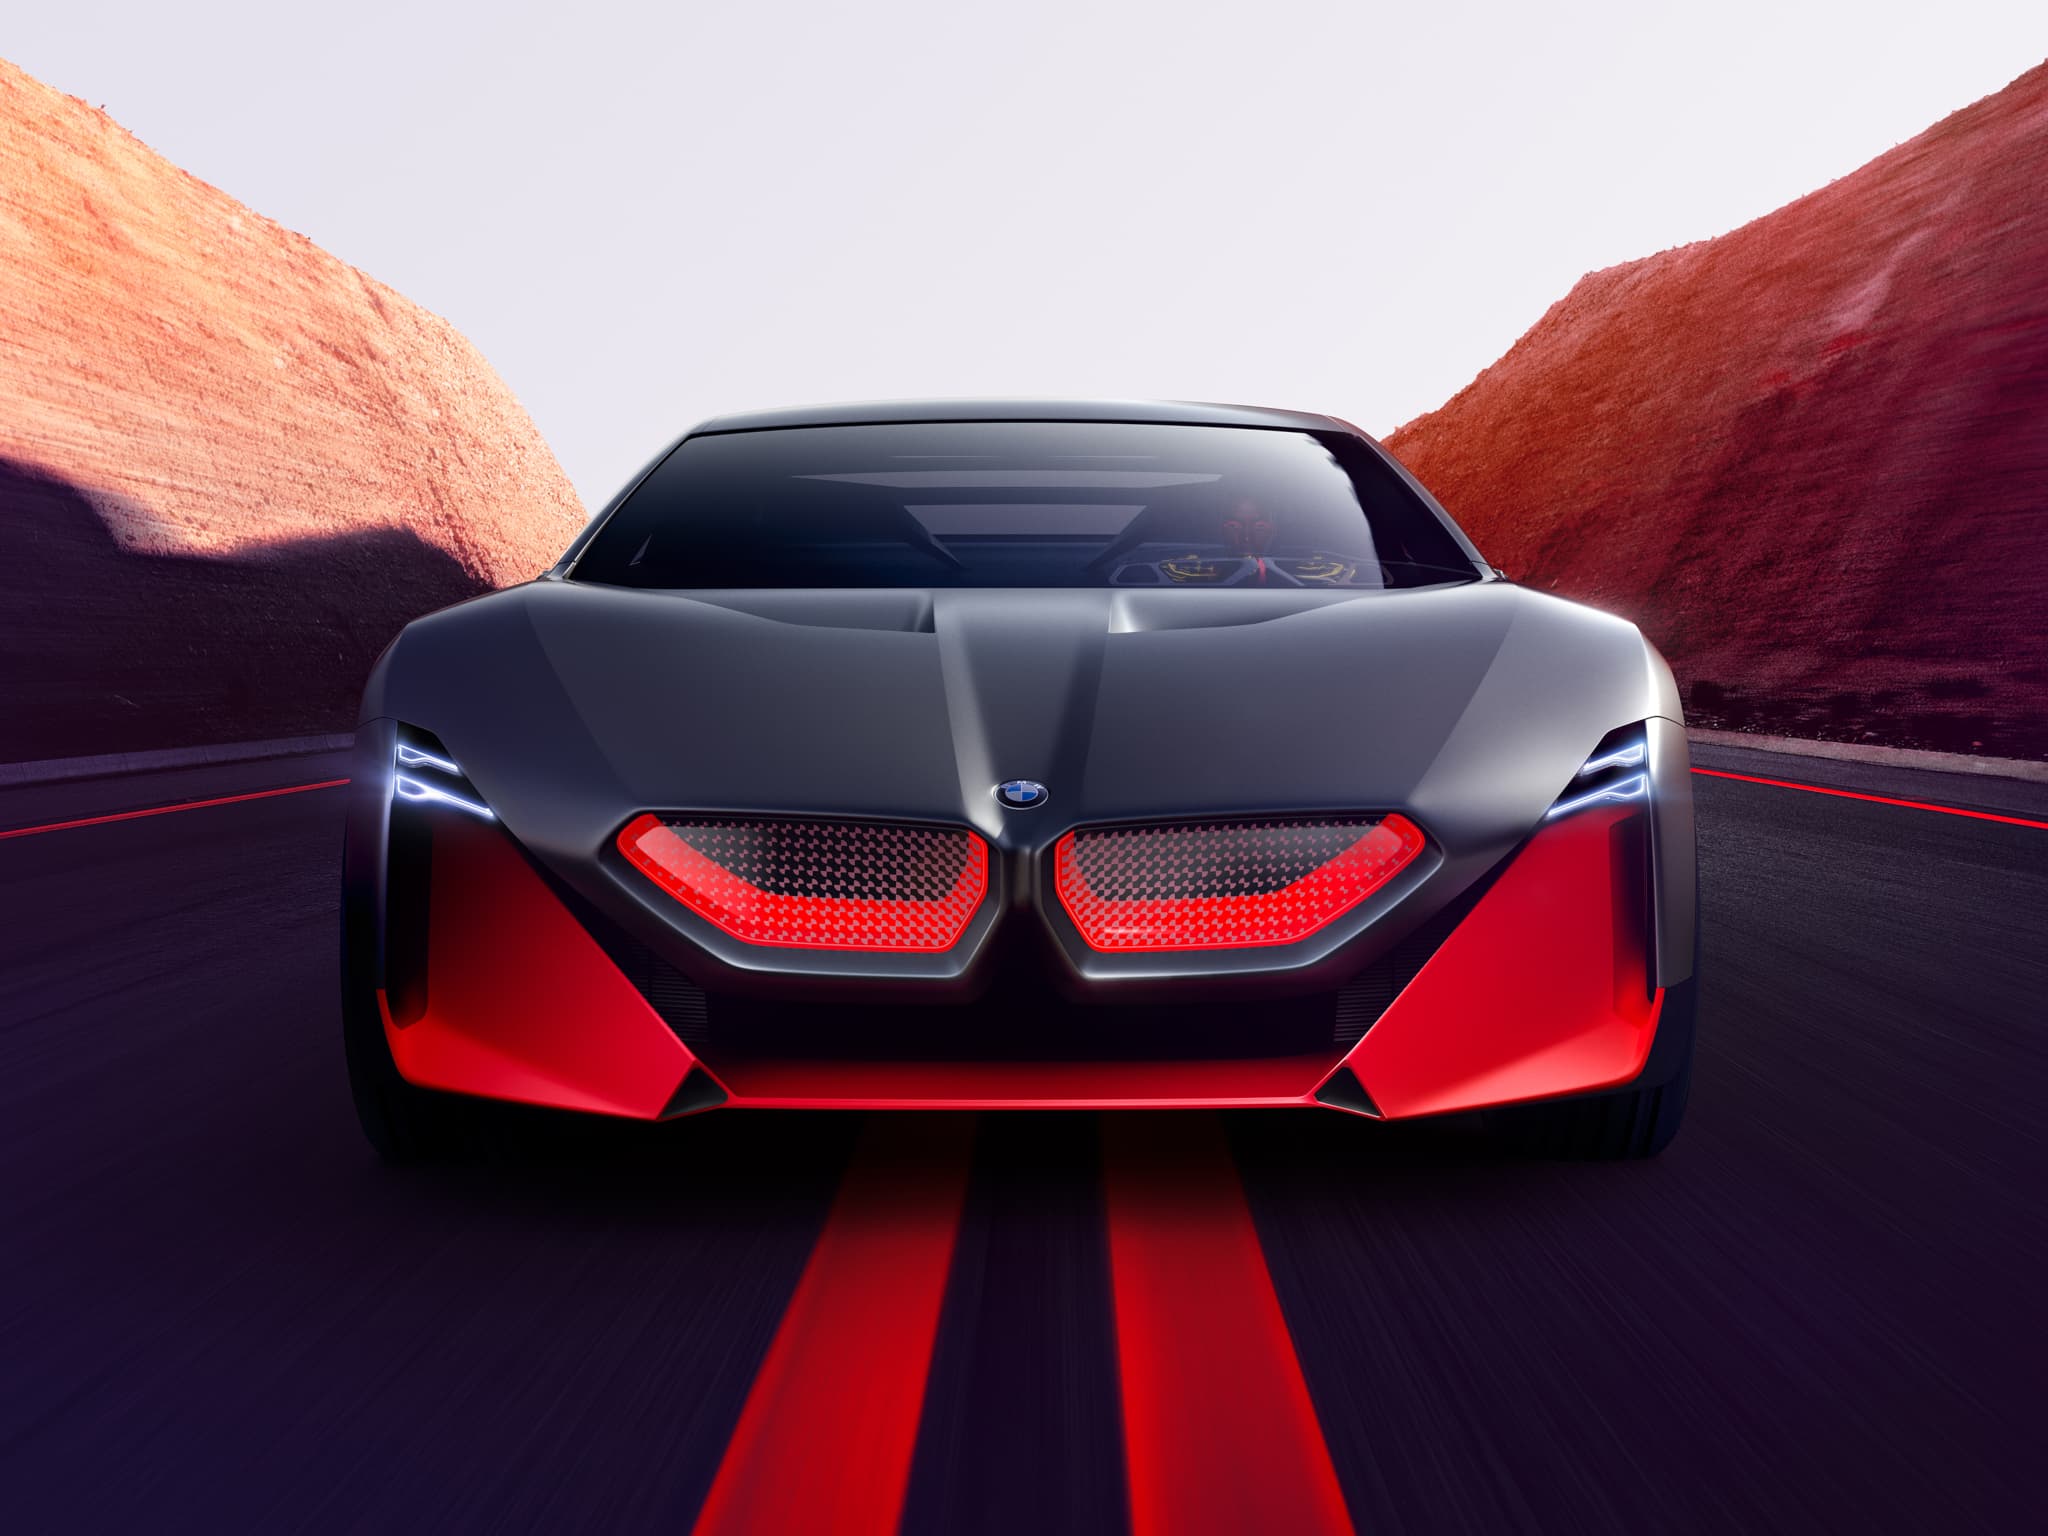 Bmw Vision M Next Phevのスポーツカーコンセプトは未来のi8 車知楽